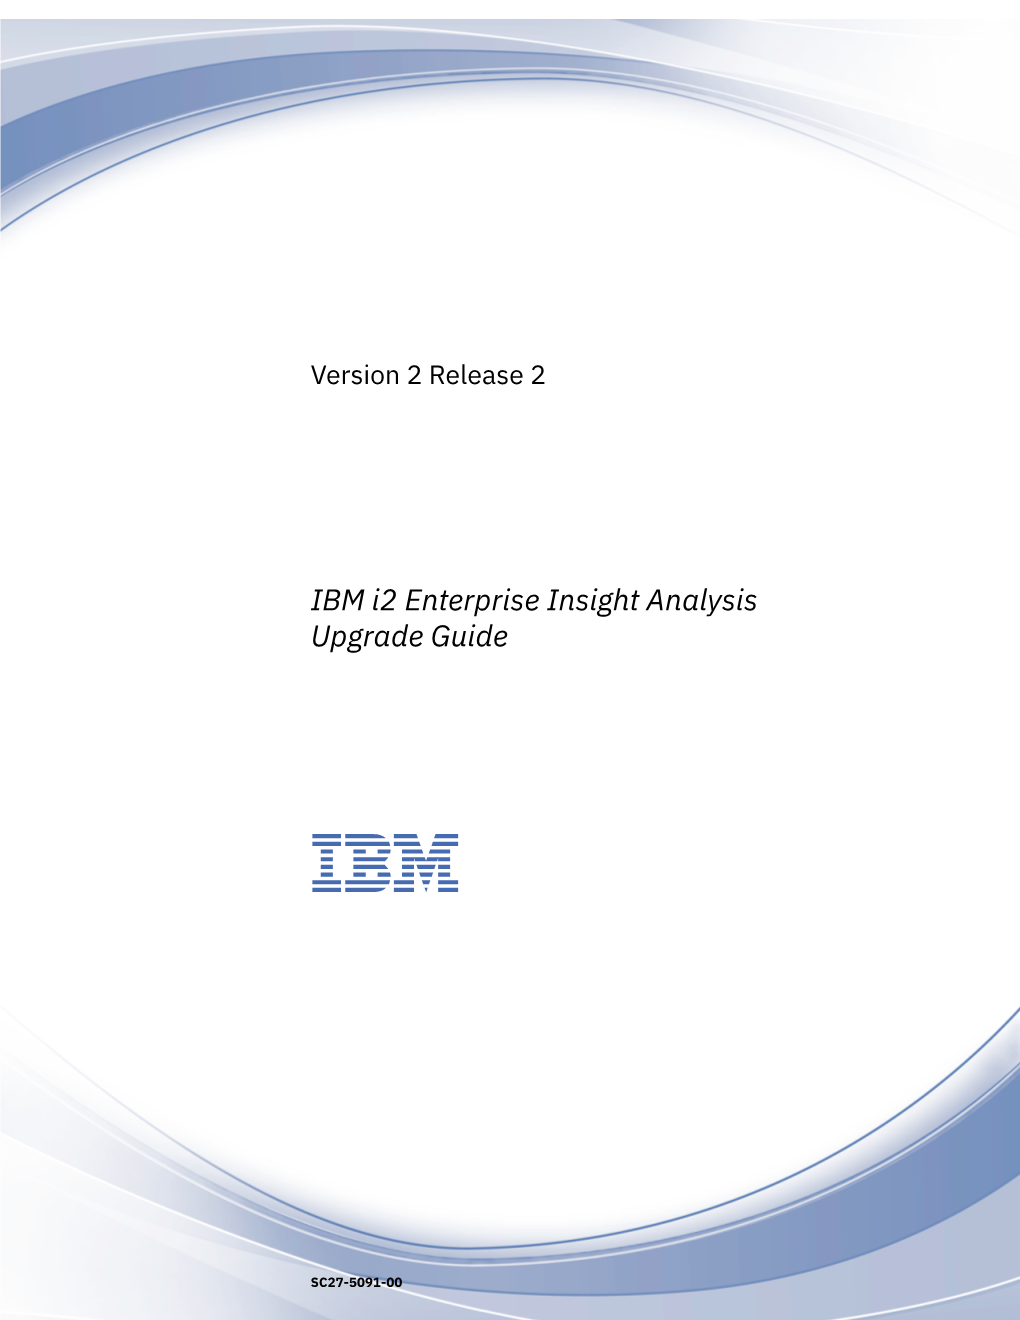 IBM I2 Enterprise Insight Analysis Upgrade Guide